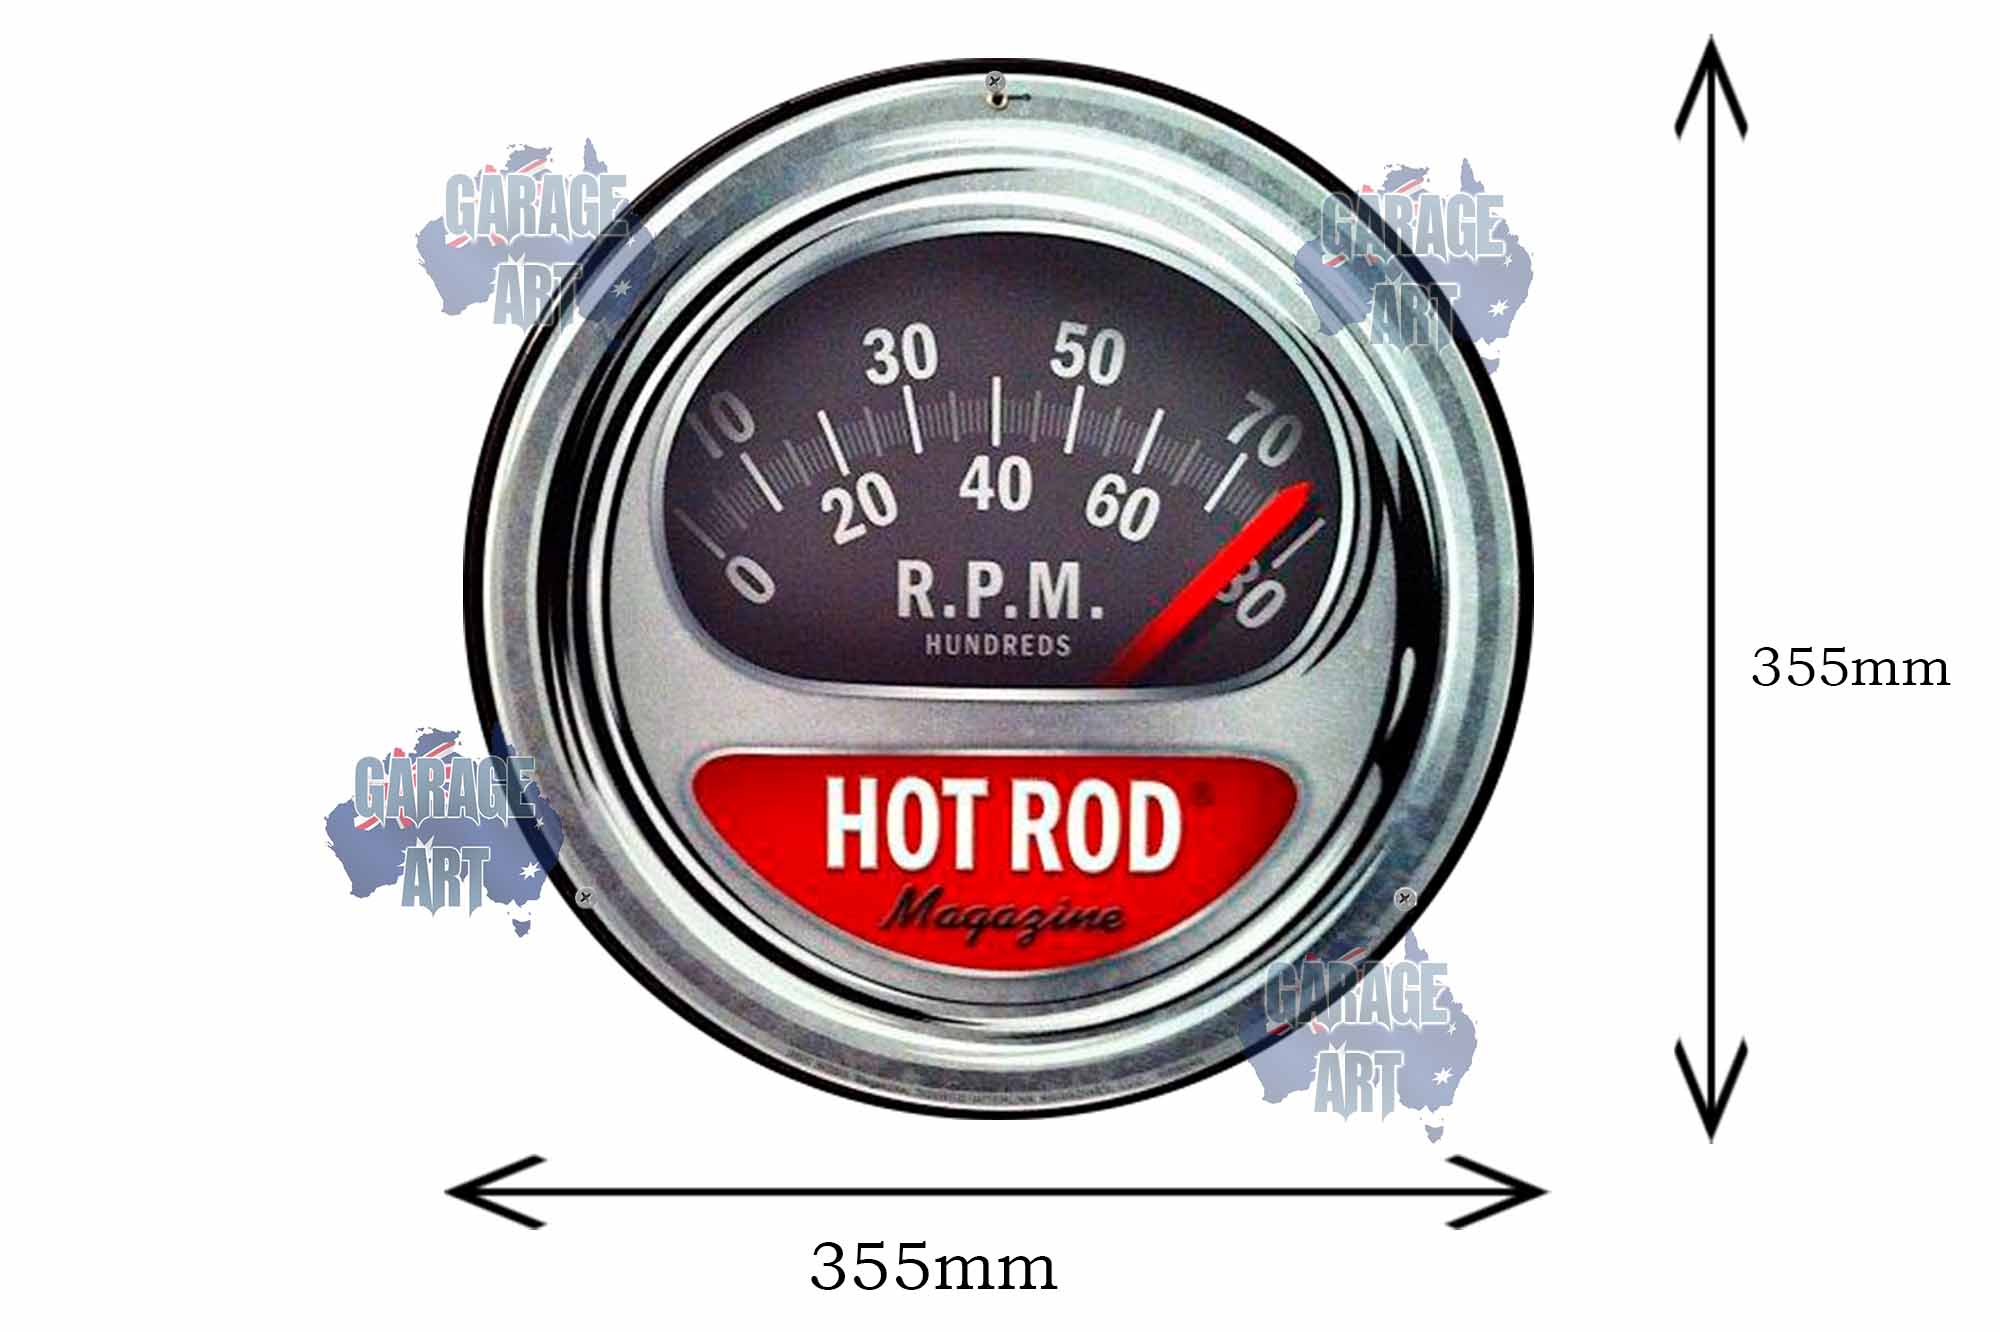 Hot Rod Magazine 355mmDia Tin Sign freeshipping - garageartaustralia